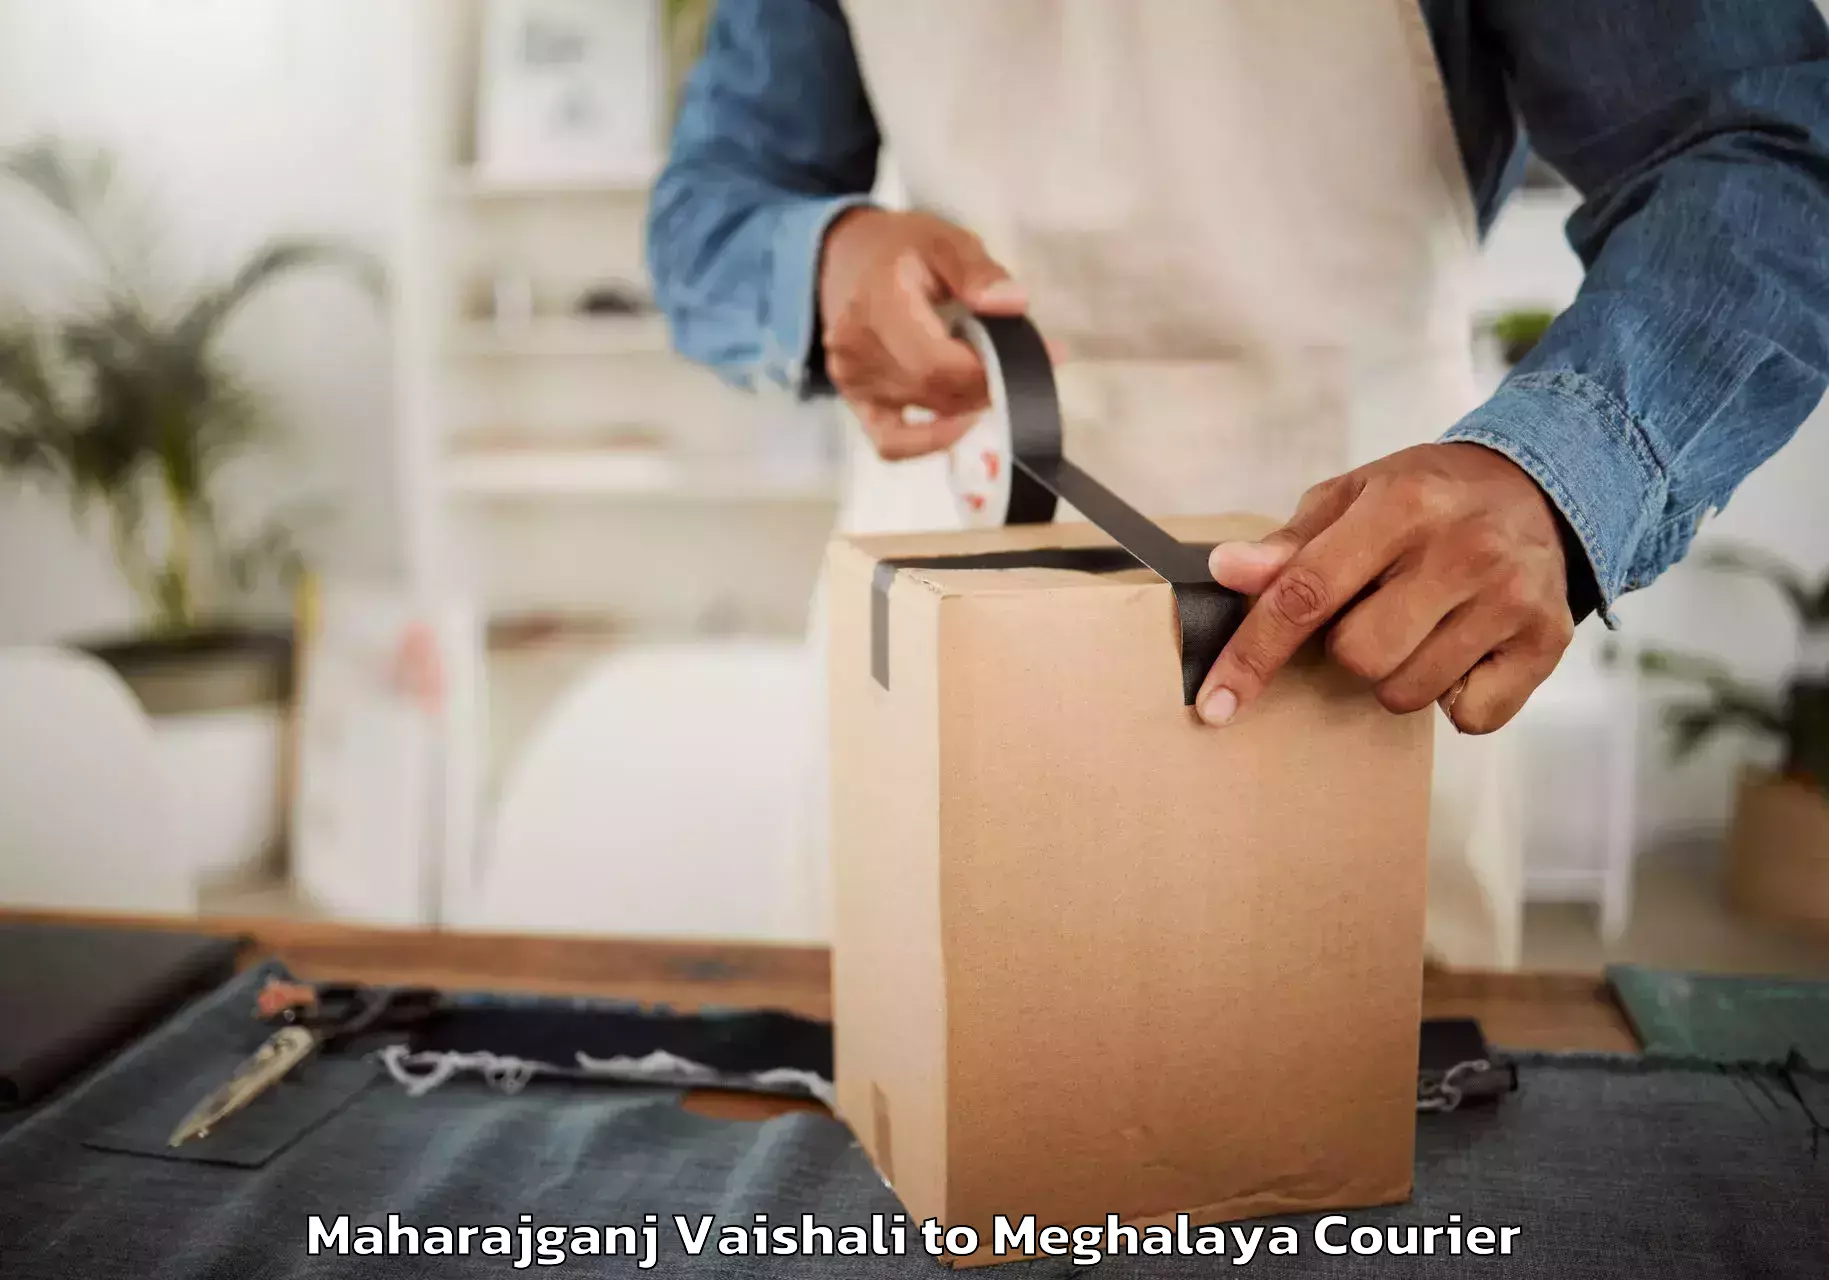 Furniture transport specialists Maharajganj Vaishali to Meghalaya